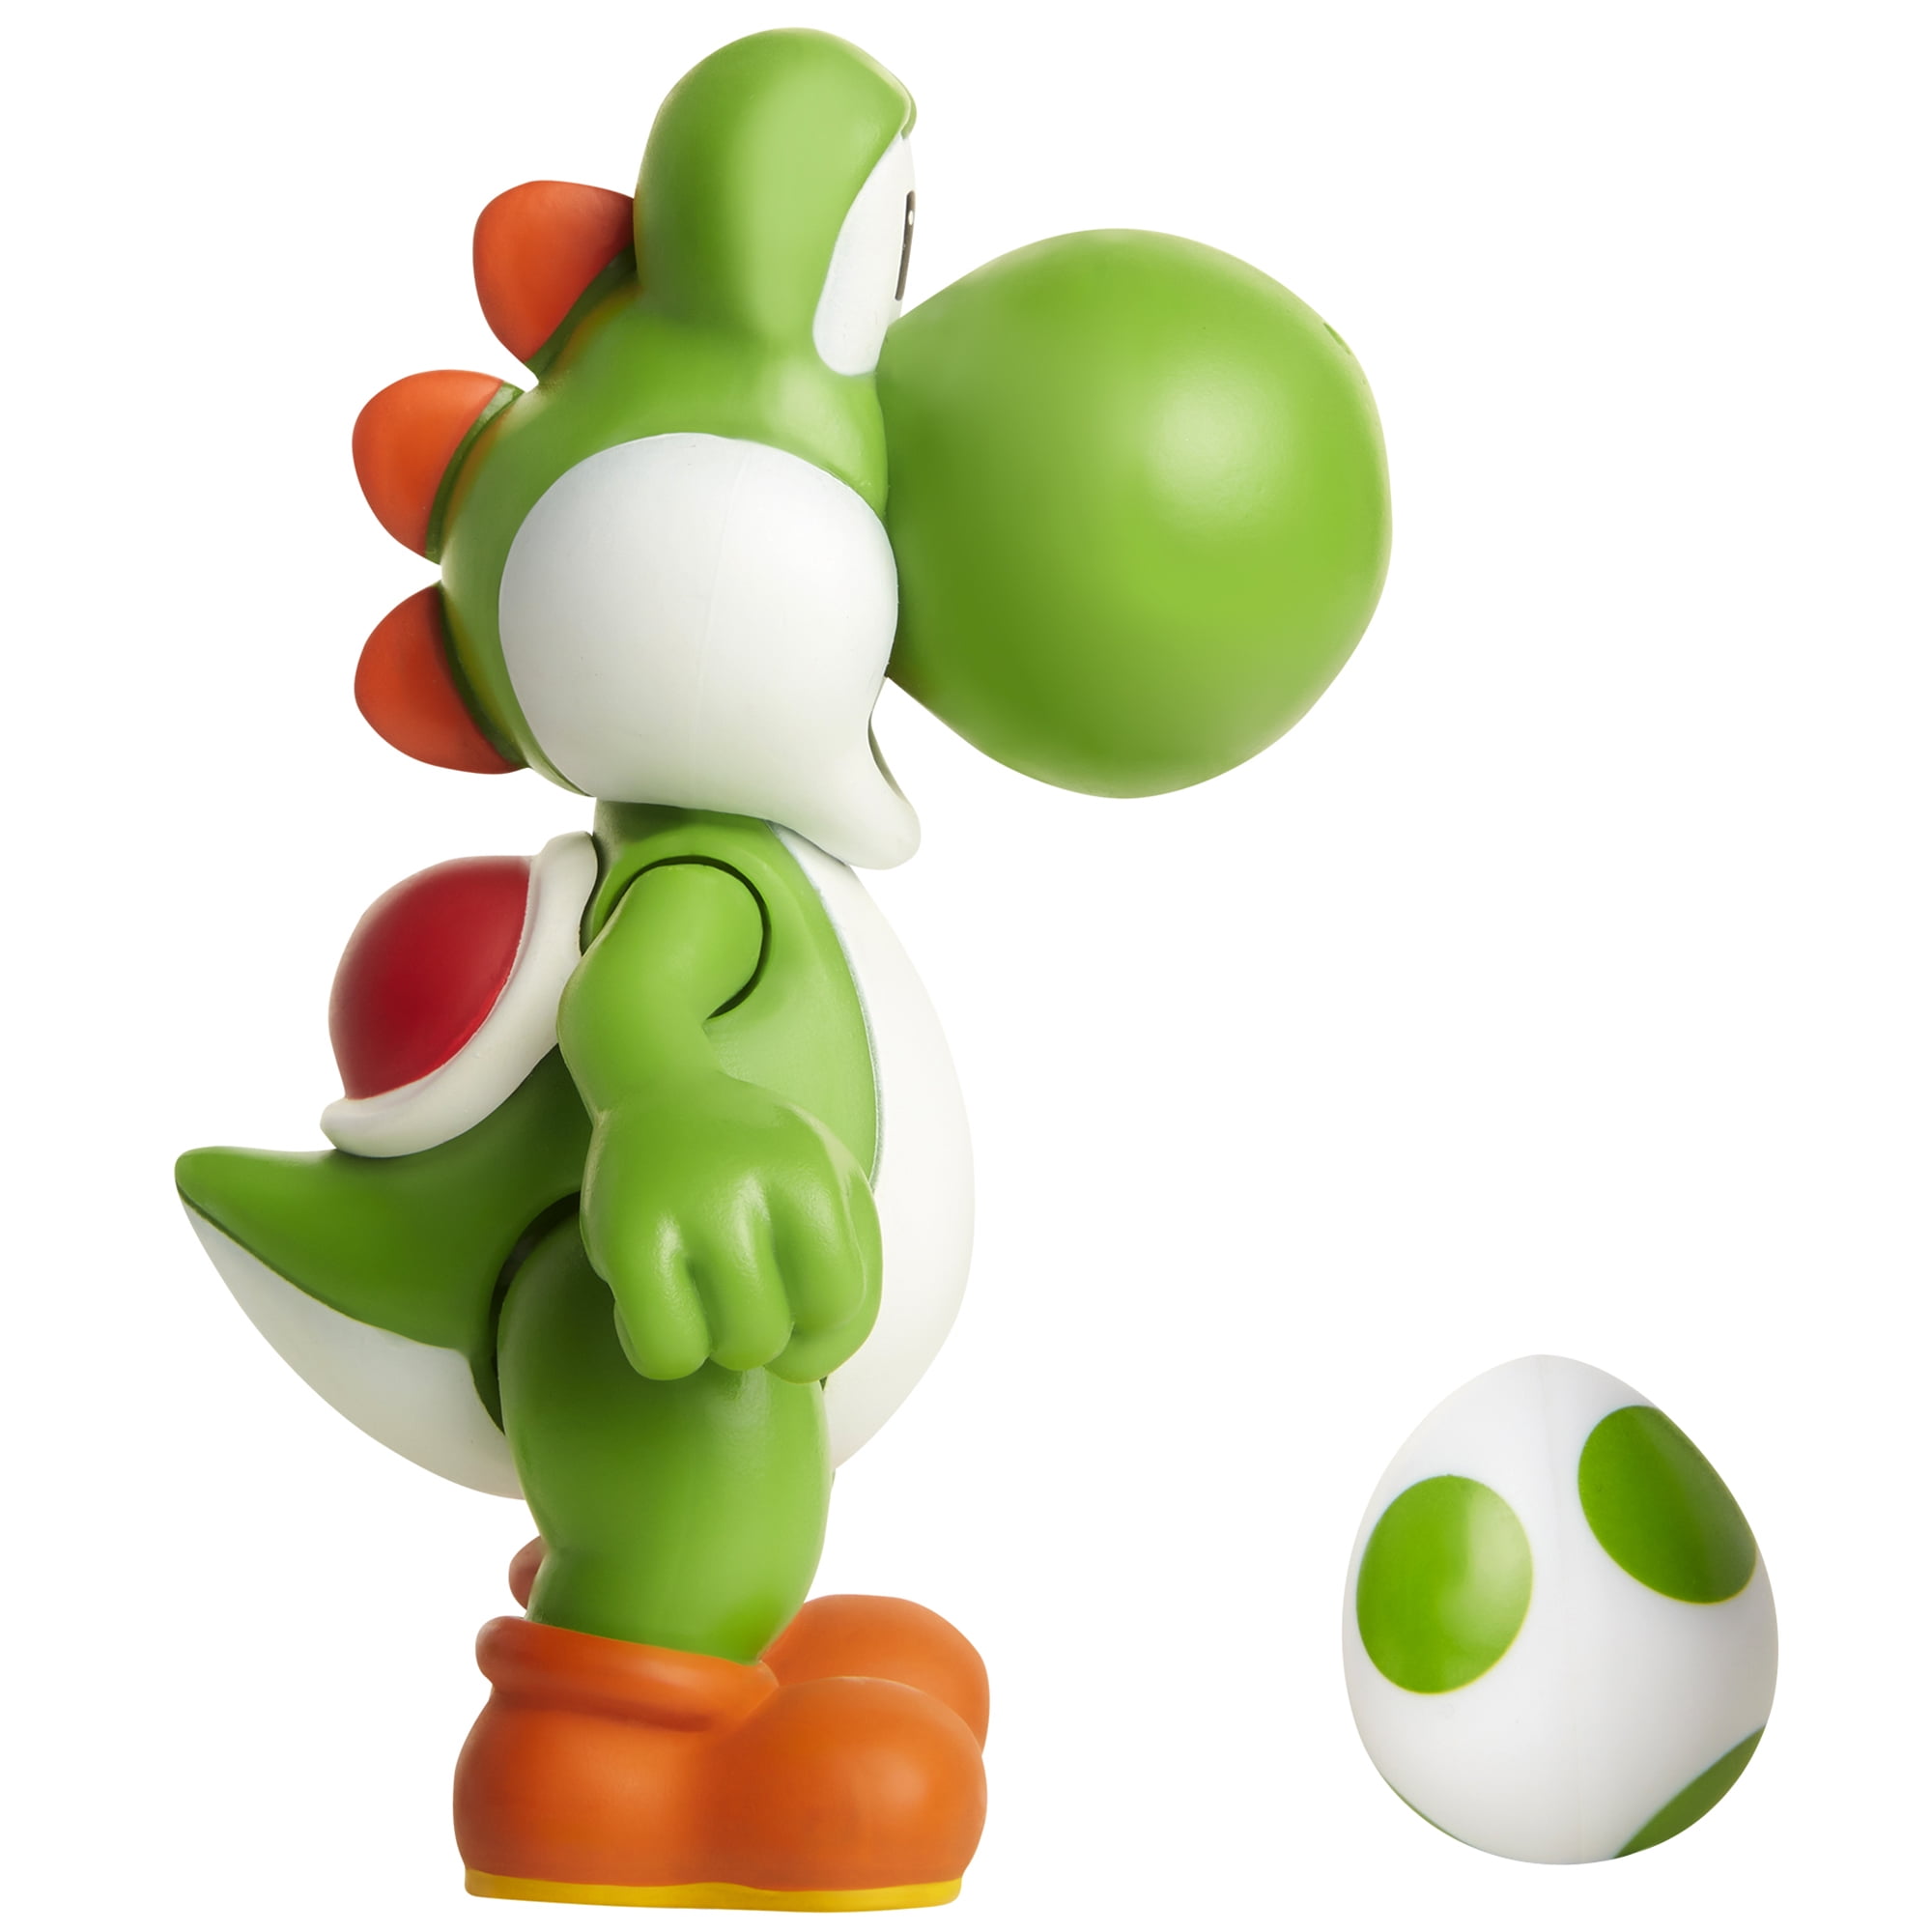 Nintendo Super Mario 4 inch Action Figure - Green Yoshi with Egg